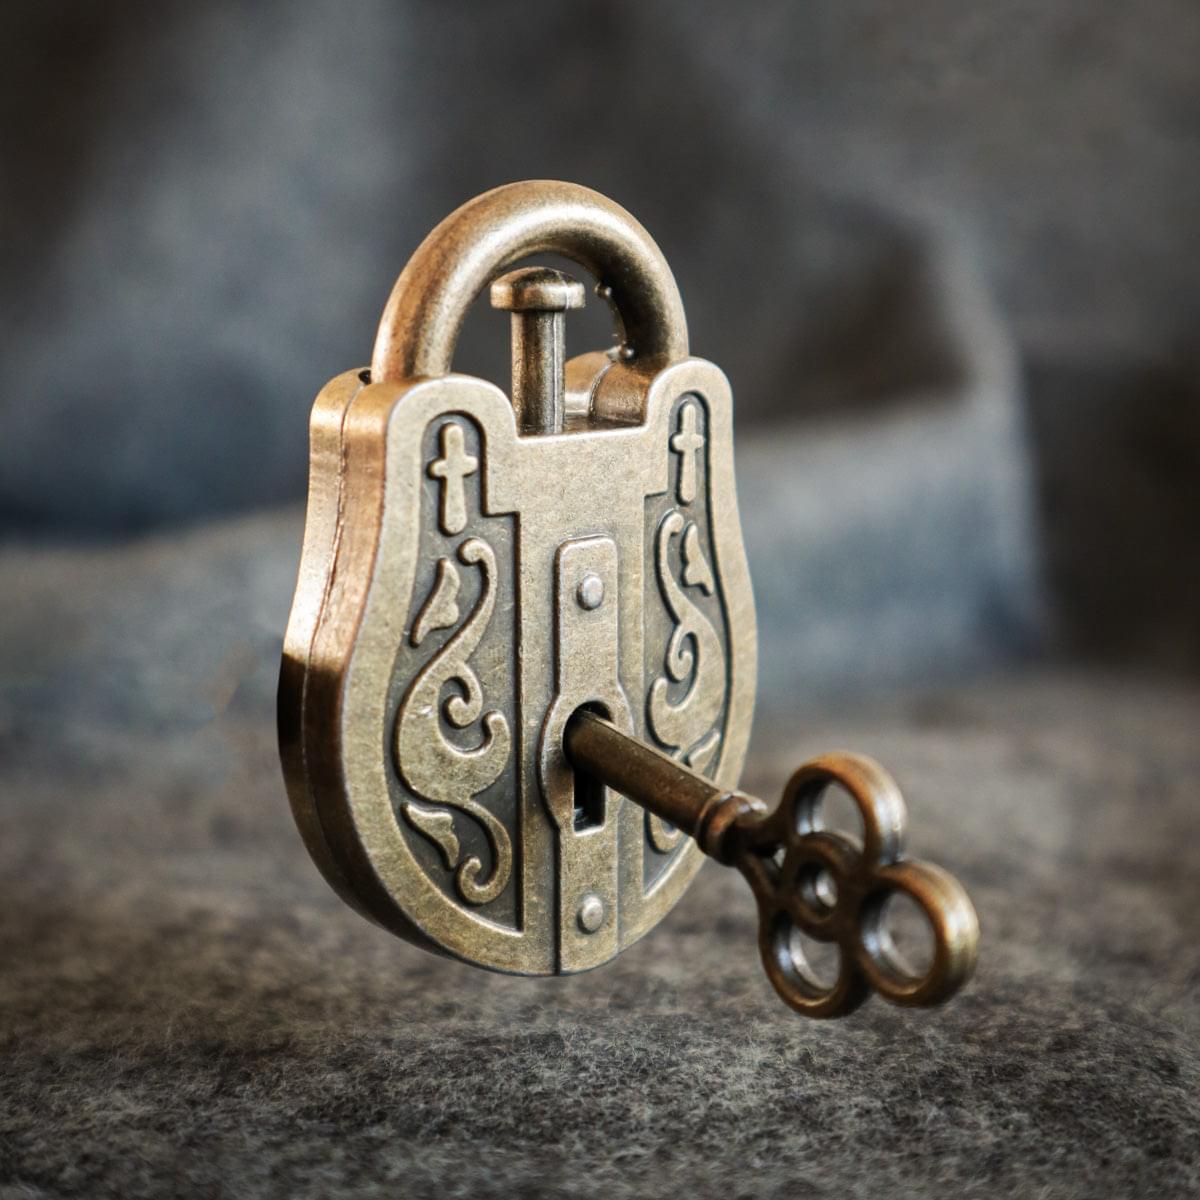 The Lock & Key Puzzle